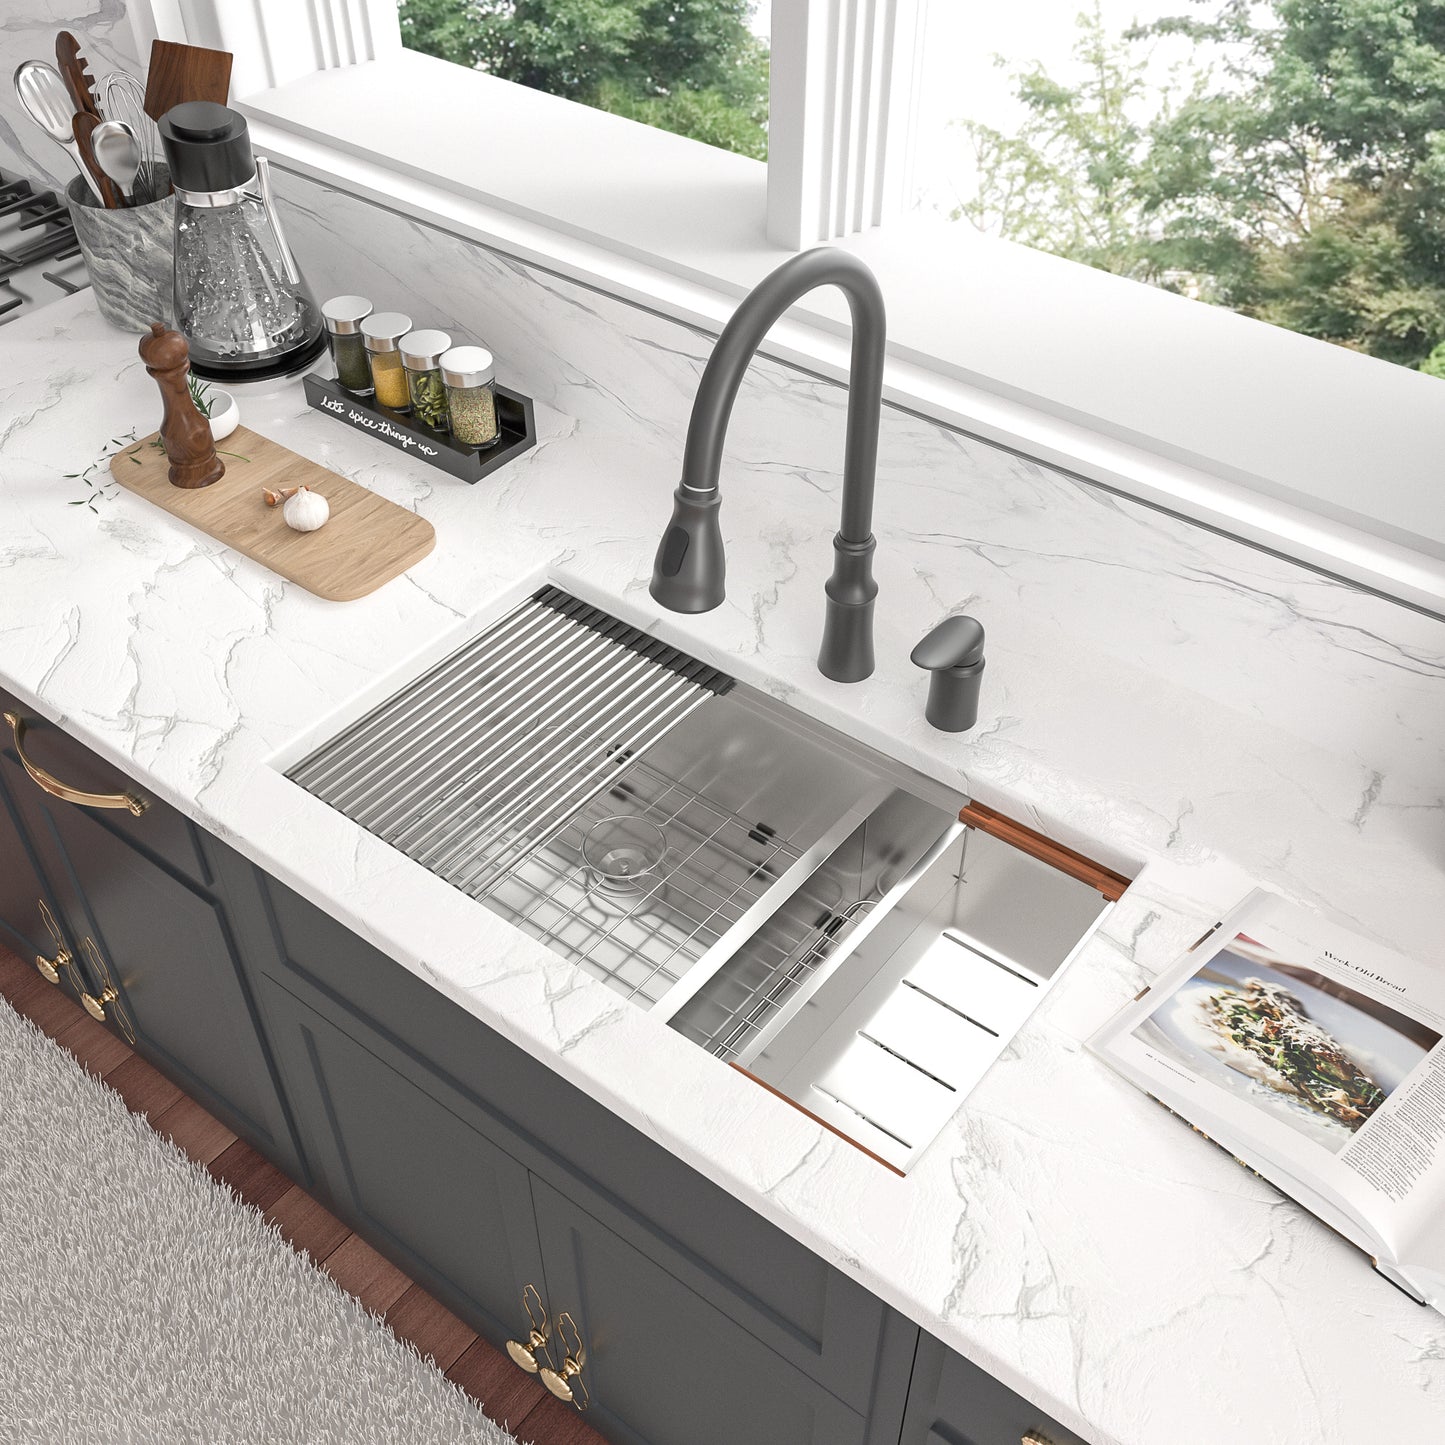 Lordear 33 Inch Undermount Workstation Sink Double Bowl 16 Gauge Stainless Steel Low Divide Kitchen Sink